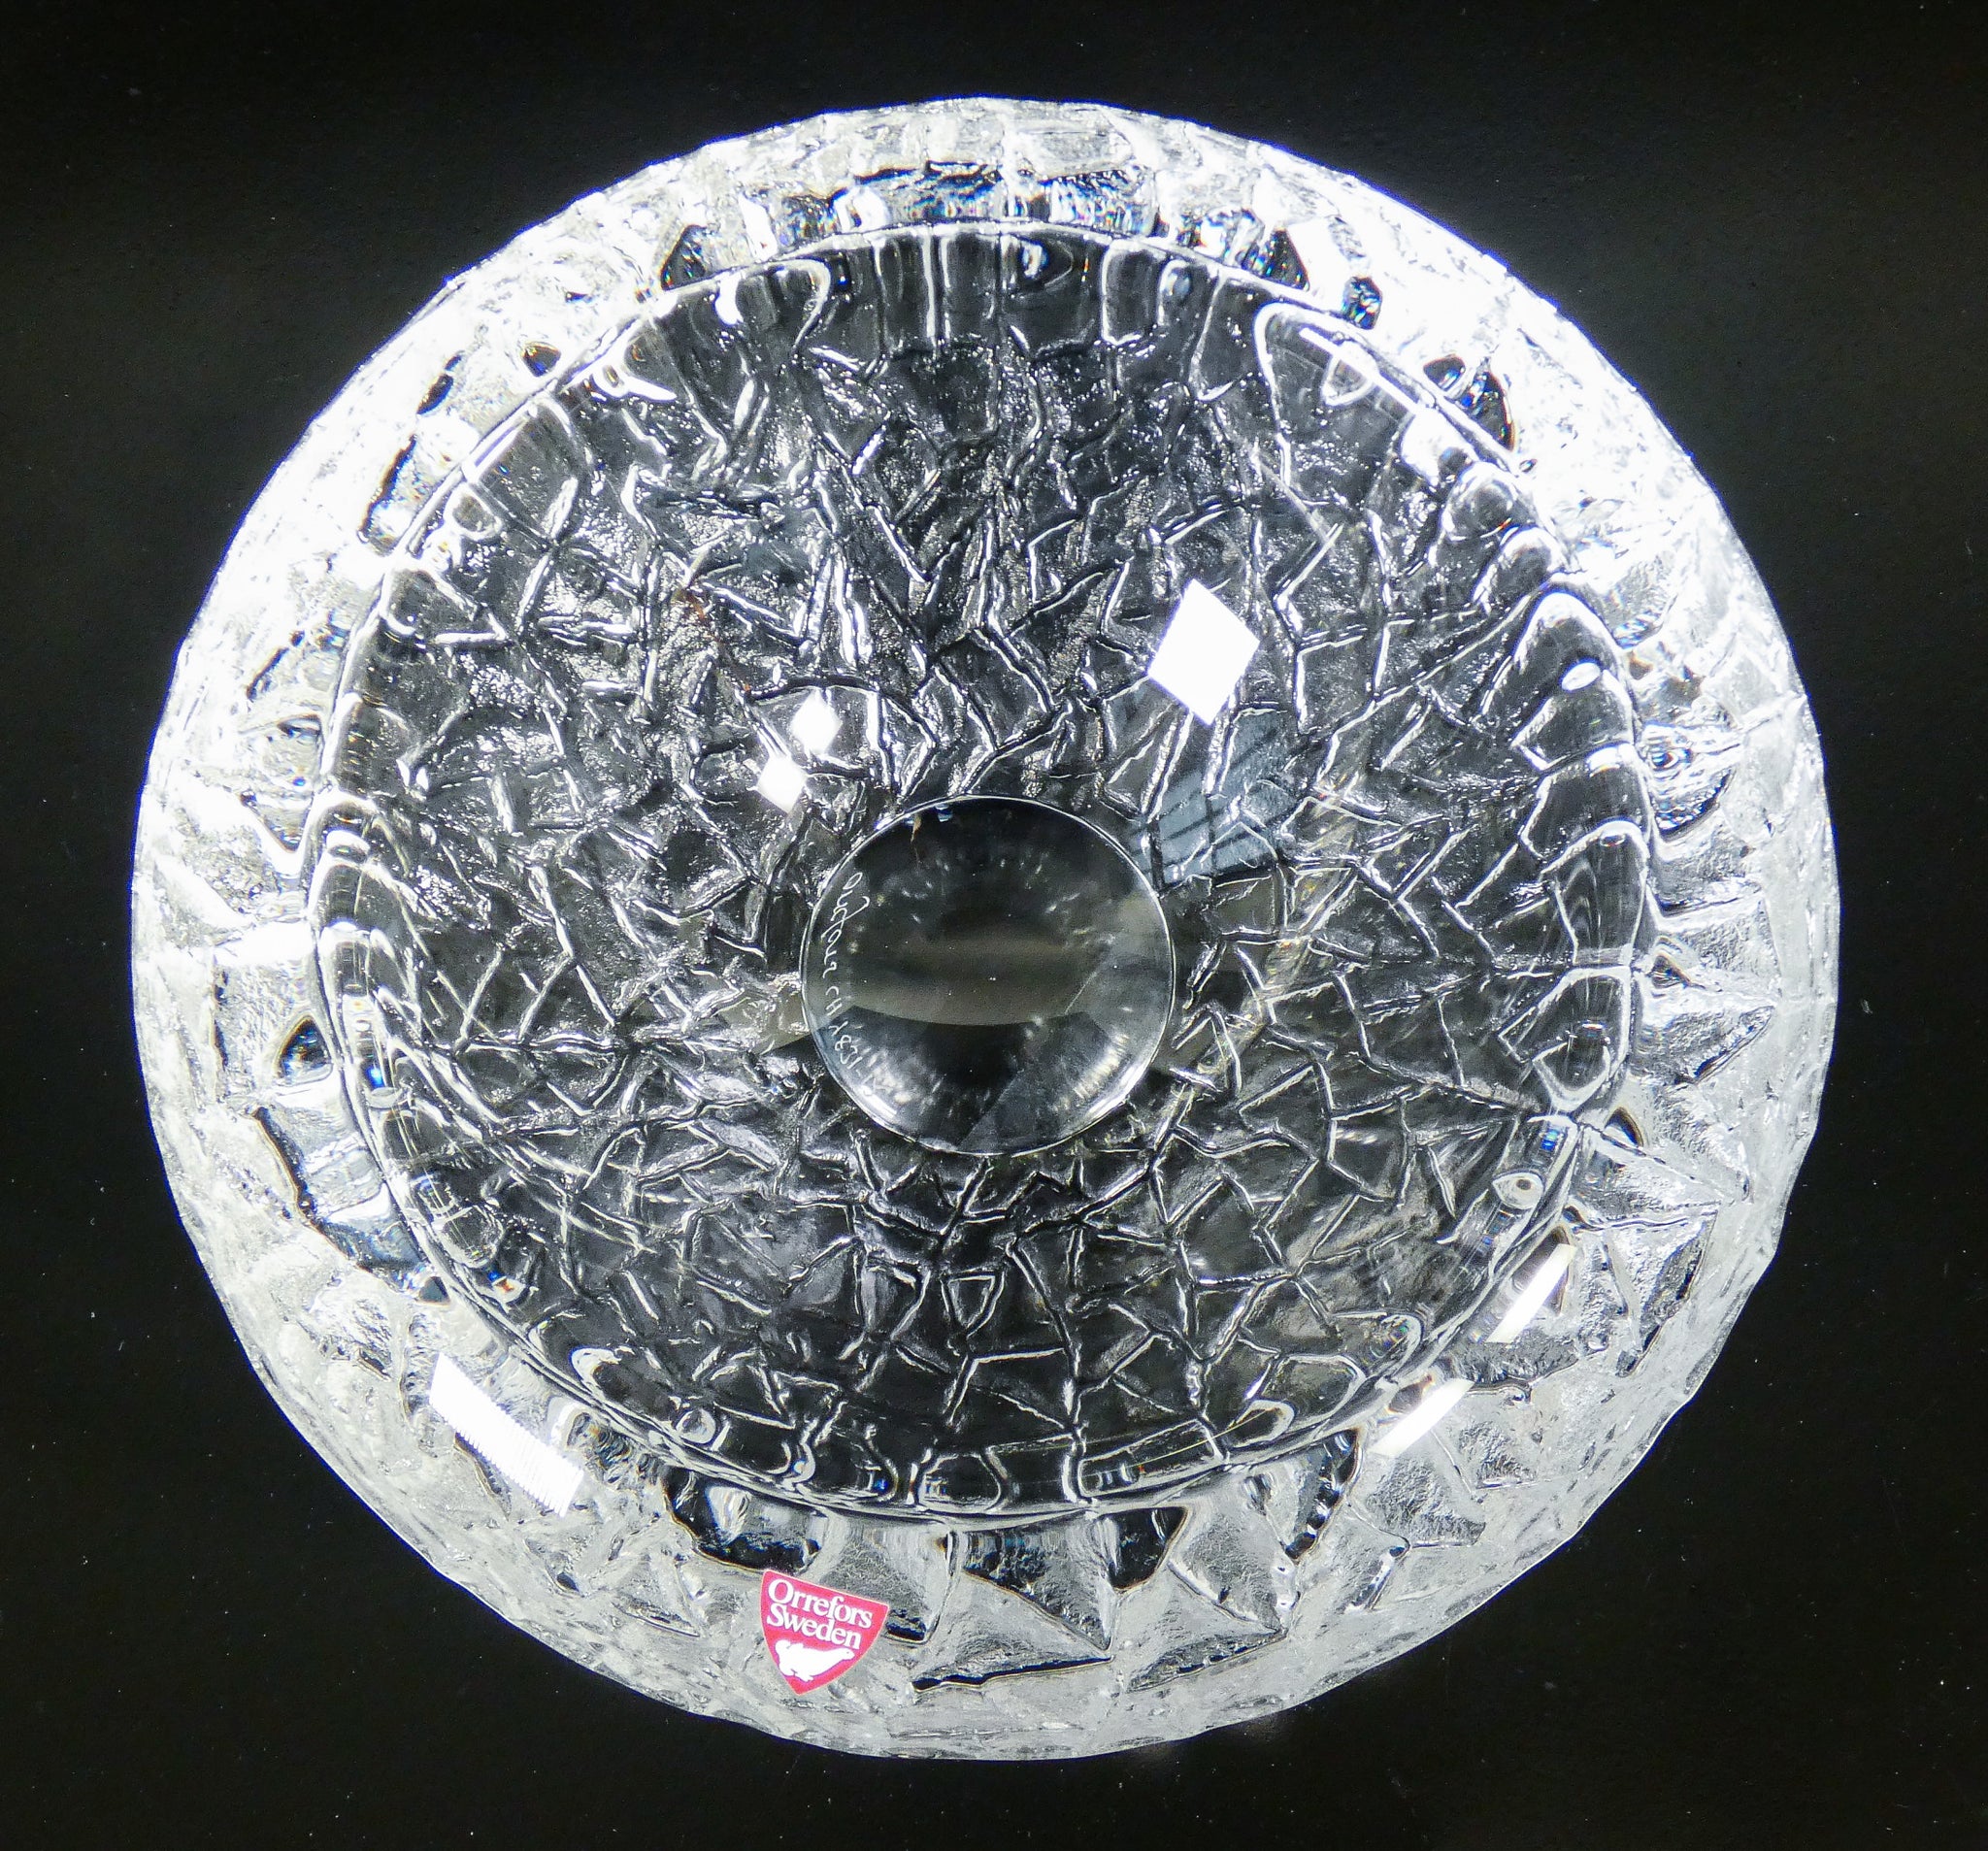 vaso svuotatasche cristallo design orrefors sweden portacenere vintage bowl